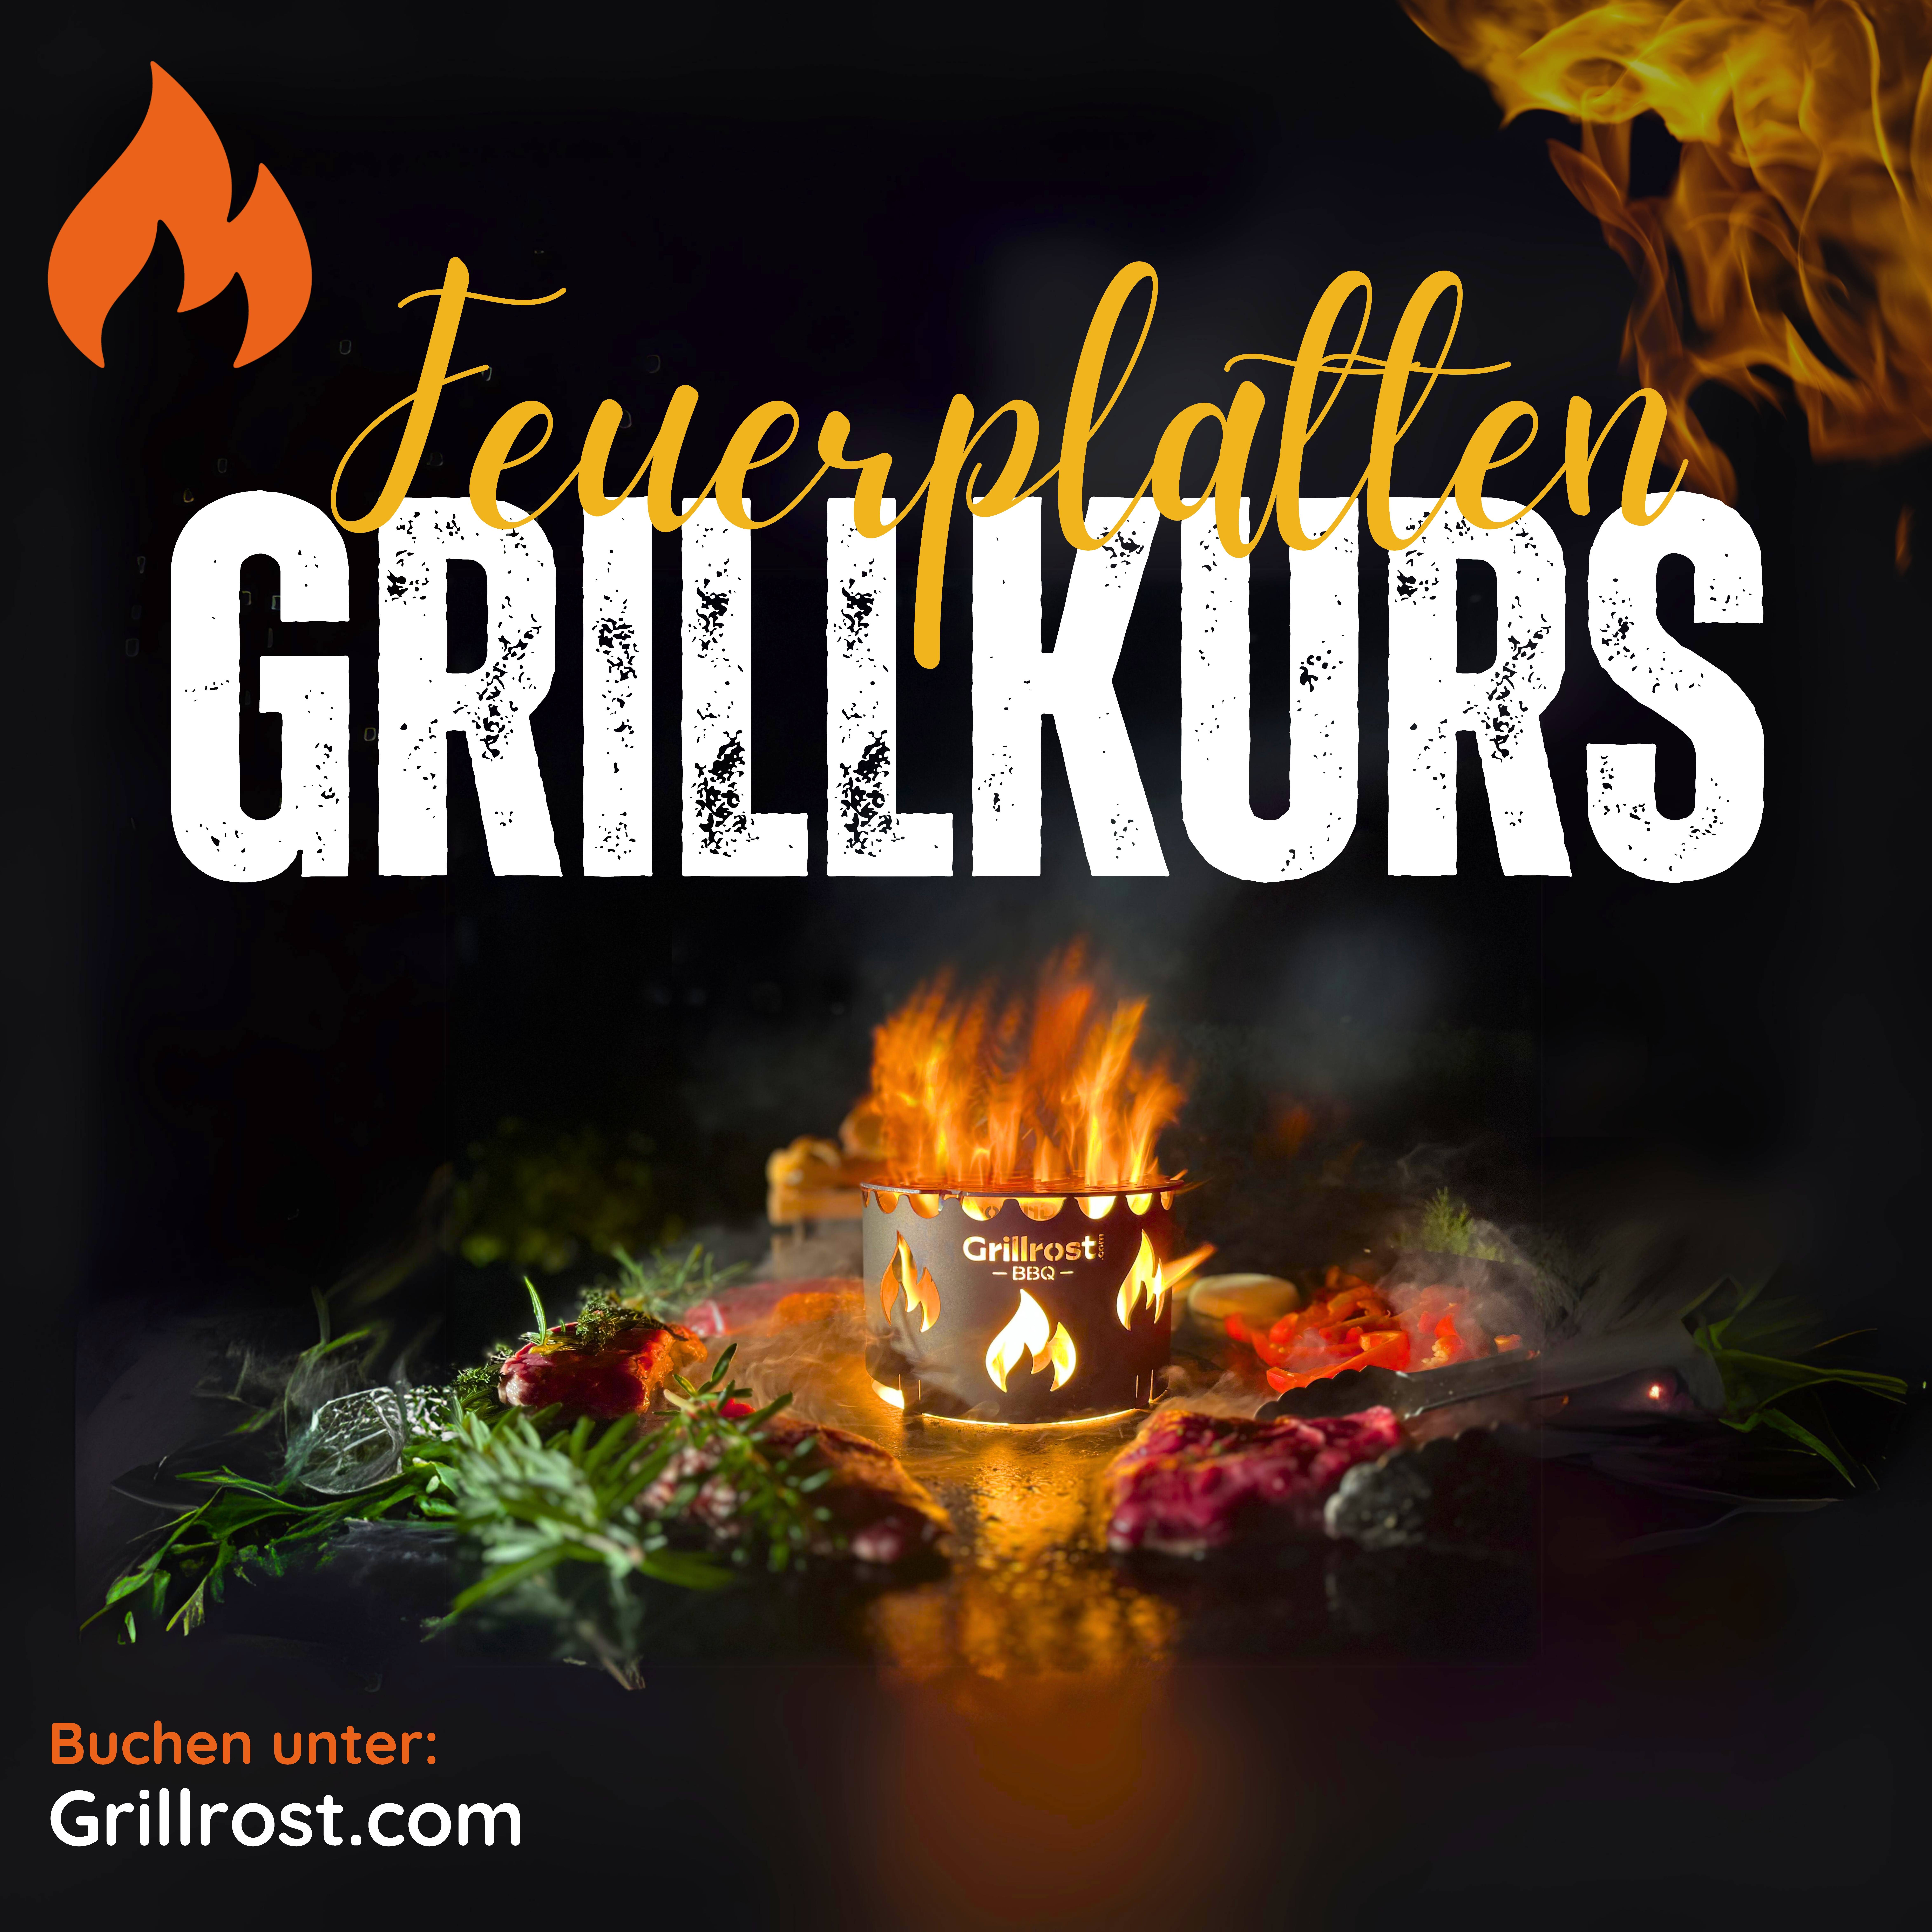 Feuerplatten Grillkurs bei Grillrost.com